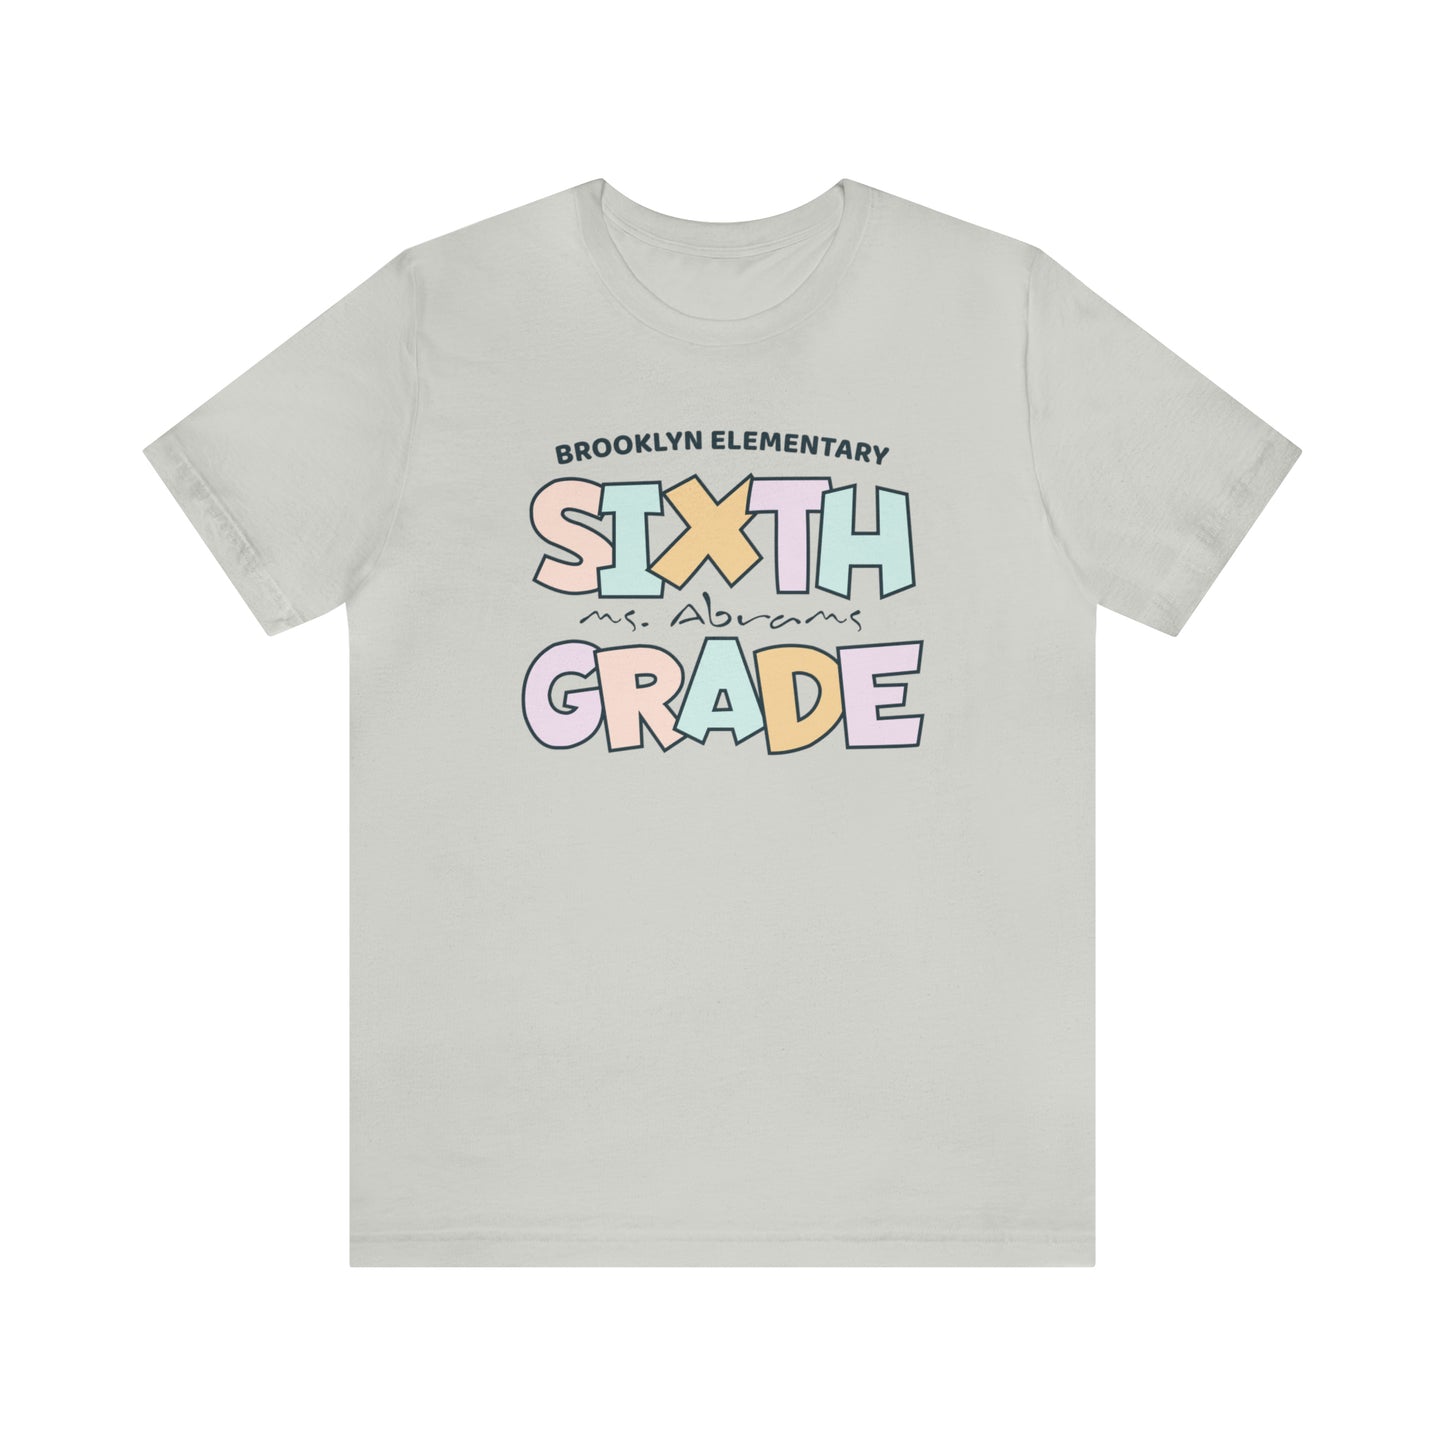 Sixth Grade Shirt, Personalized Teacher and School Shirt - Customized any Grade Teacher Team